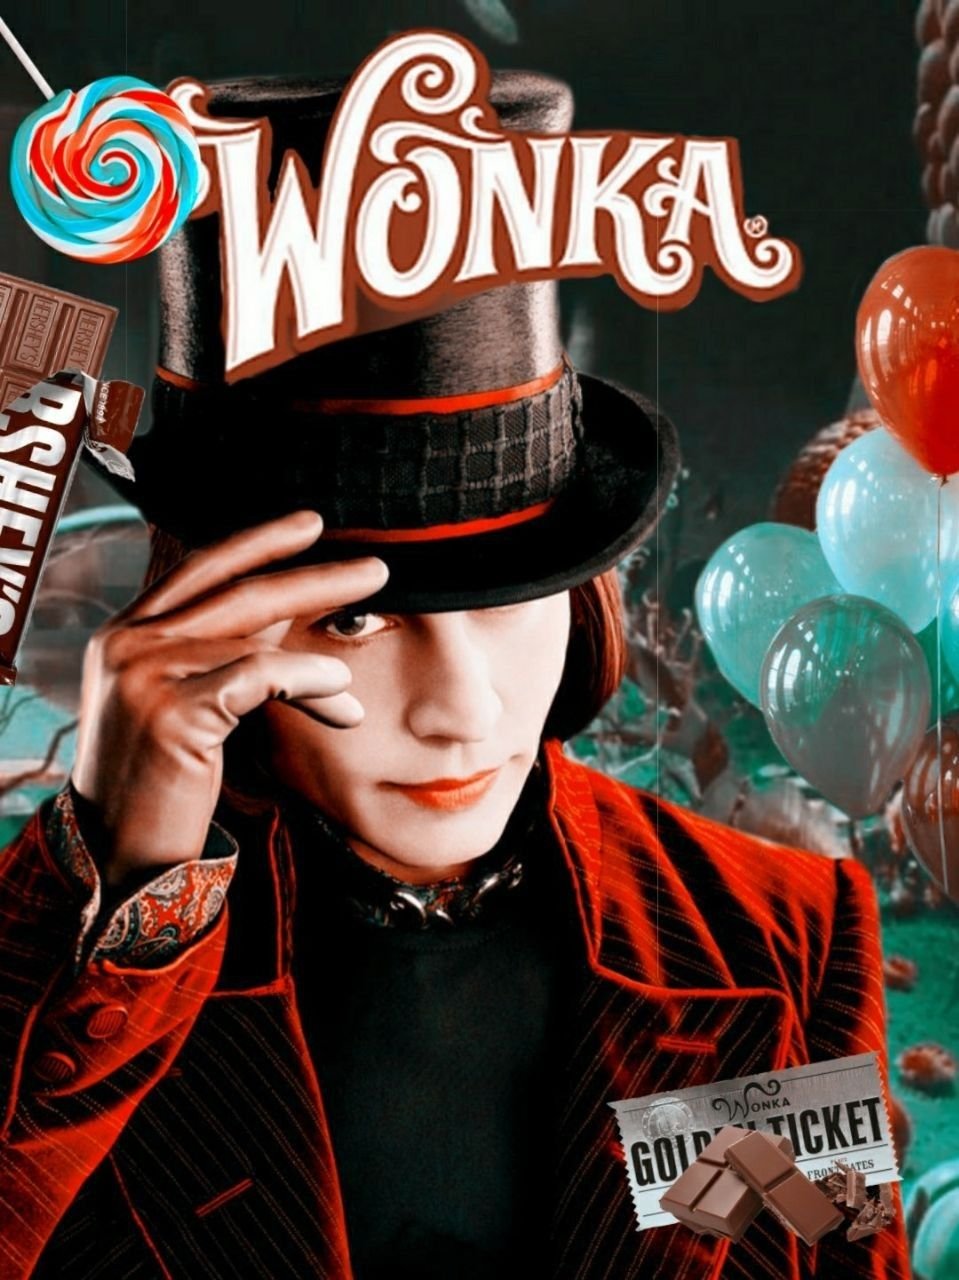 Wonka imagination. Джонни Депп шоколадная фабрика. Вилл звонка.